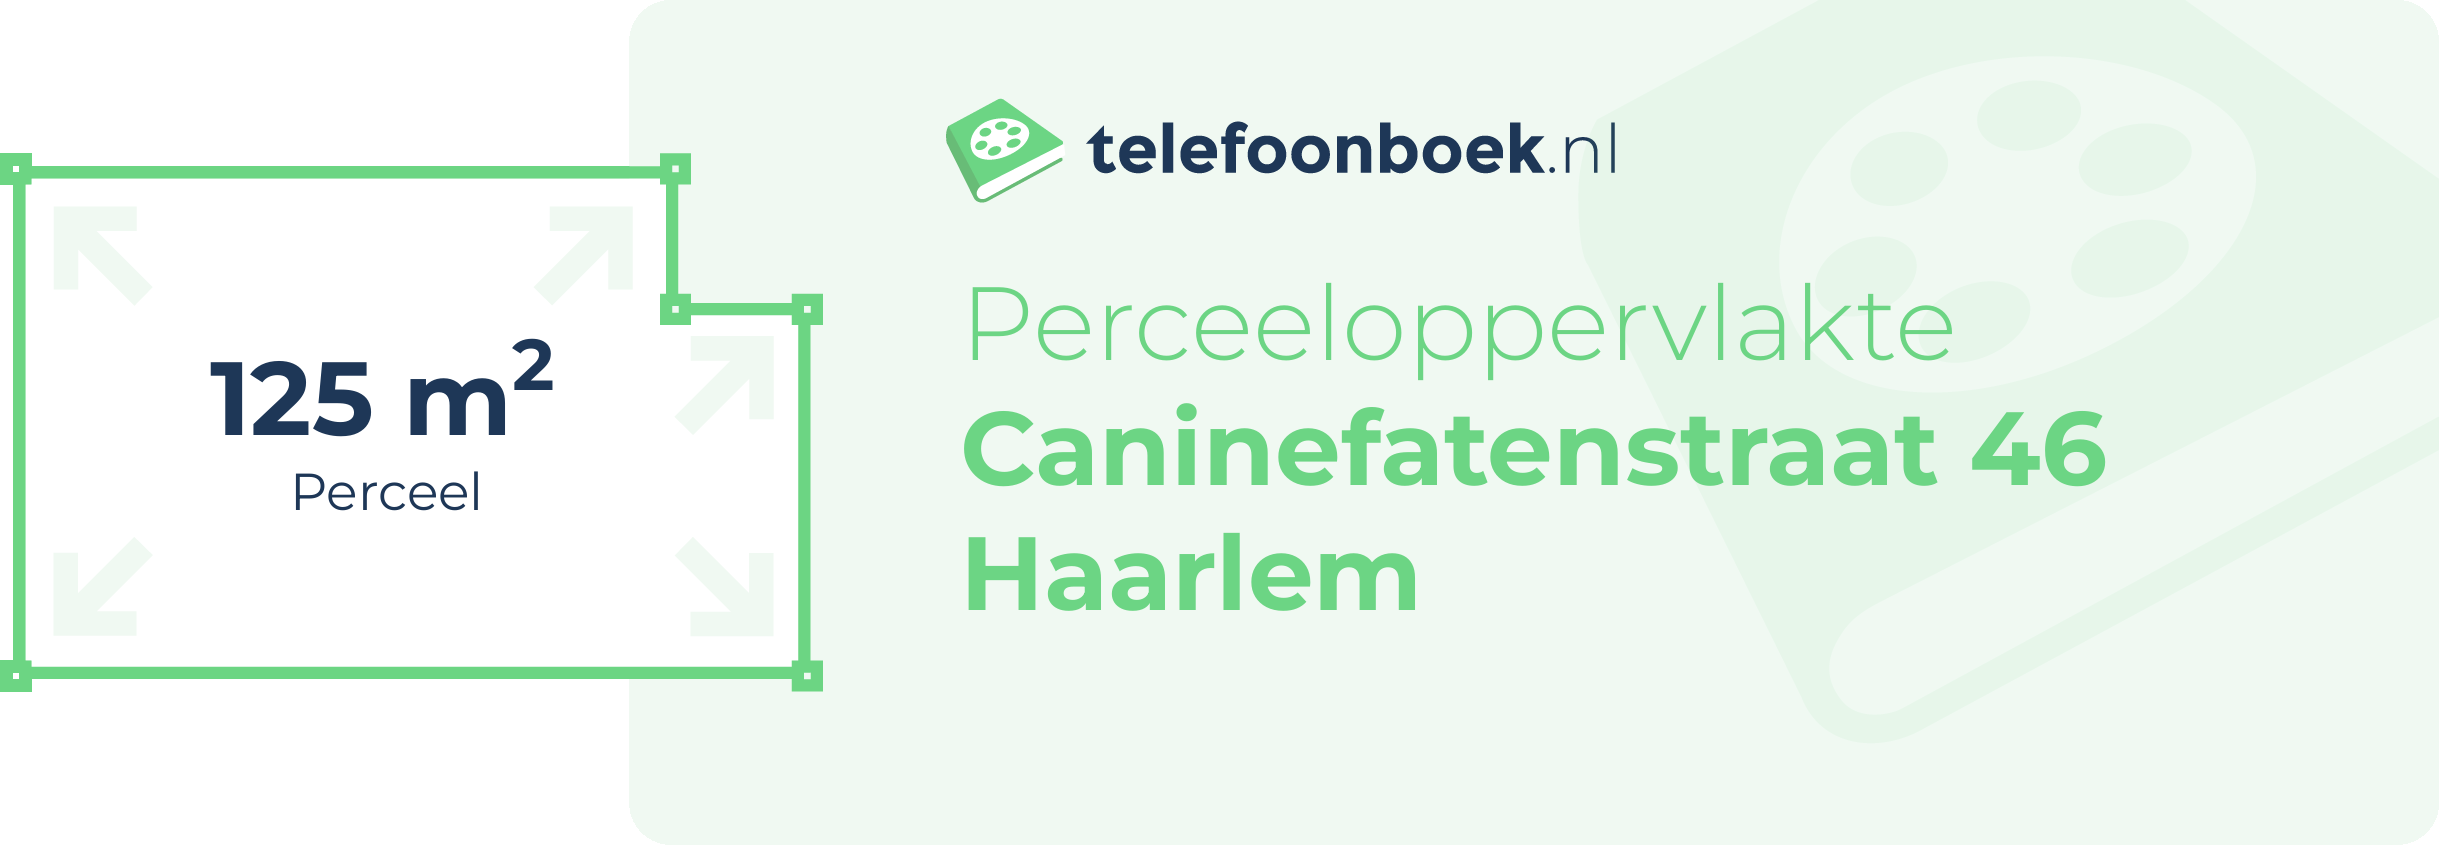 Perceeloppervlakte Caninefatenstraat 46 Haarlem